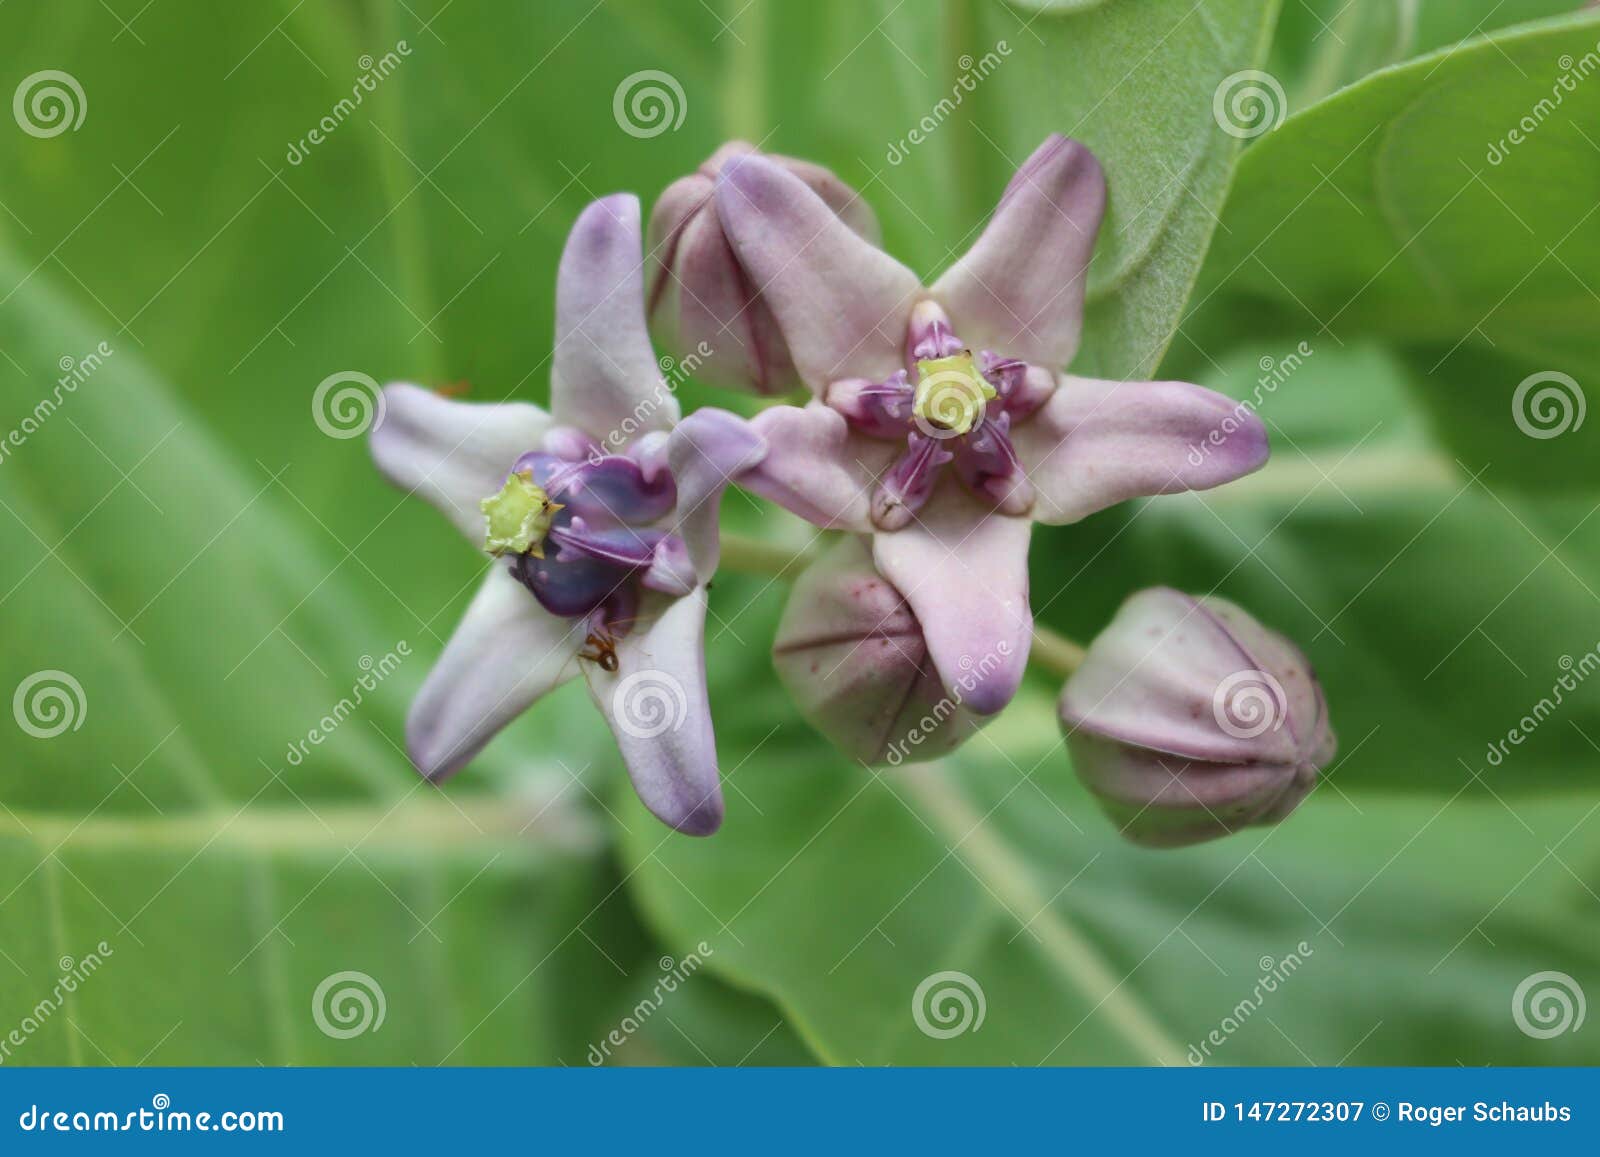 crown flower - calotropis